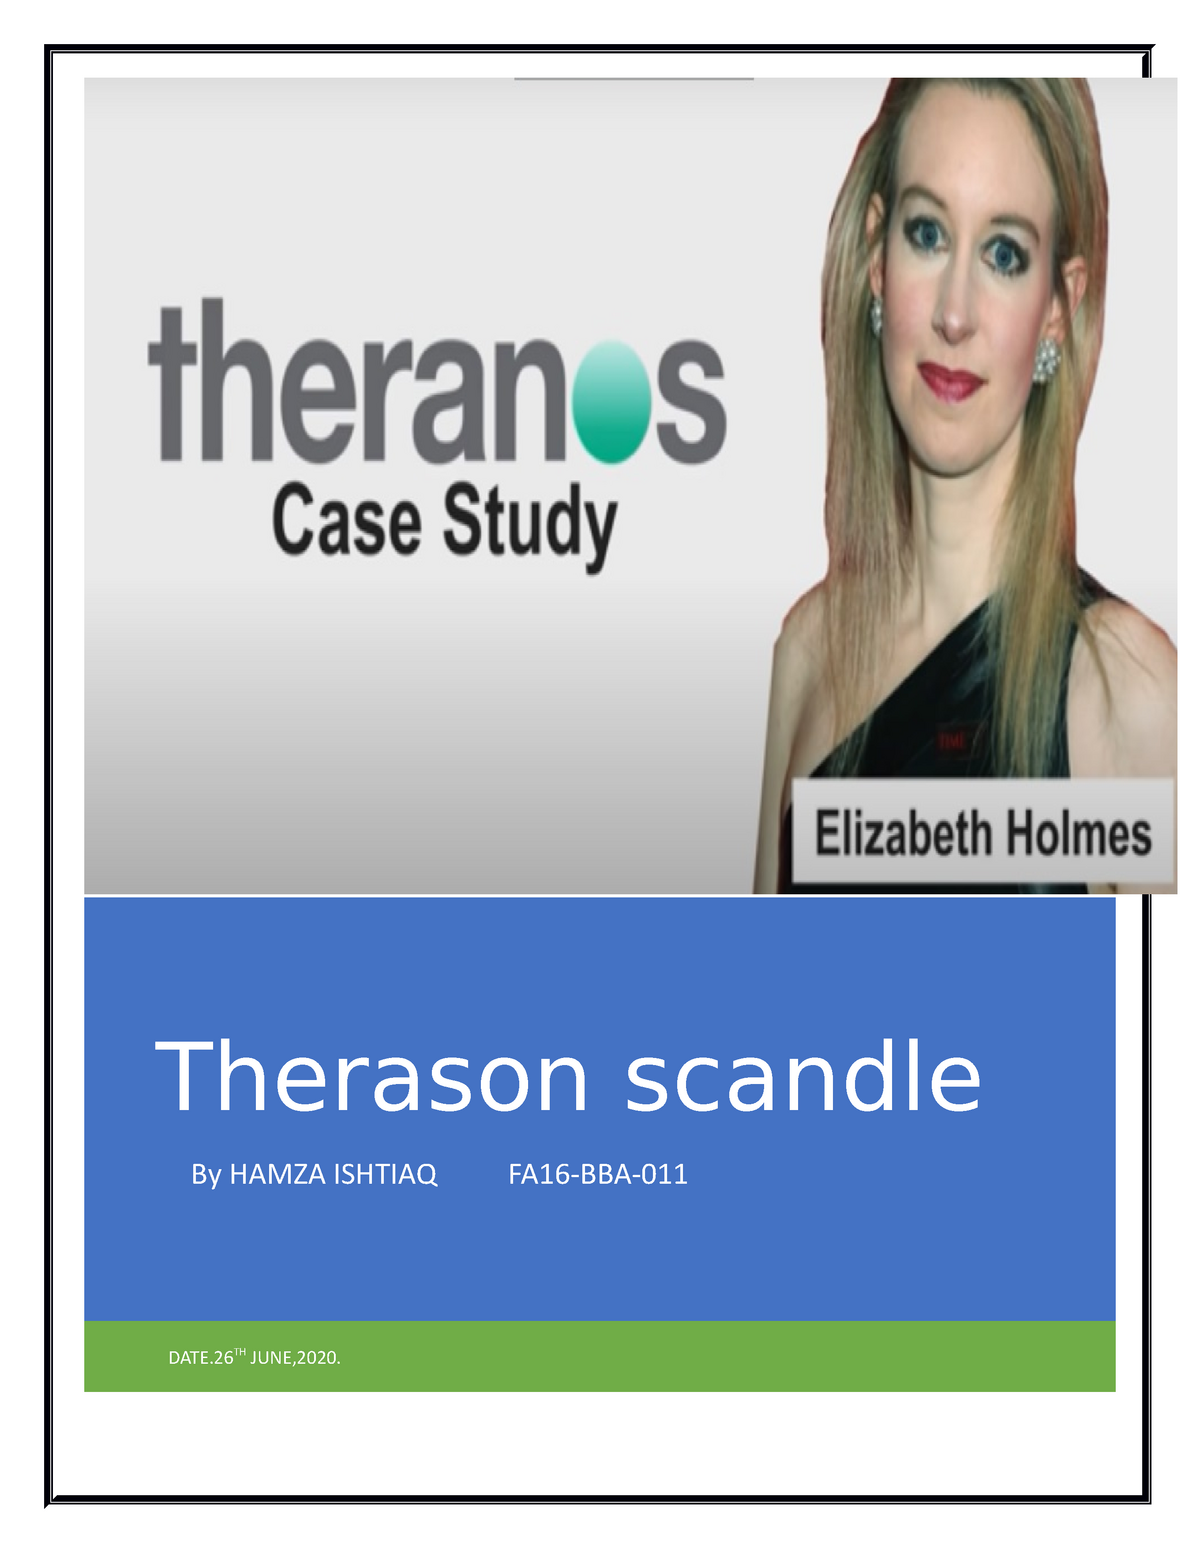 theranos case study analysis